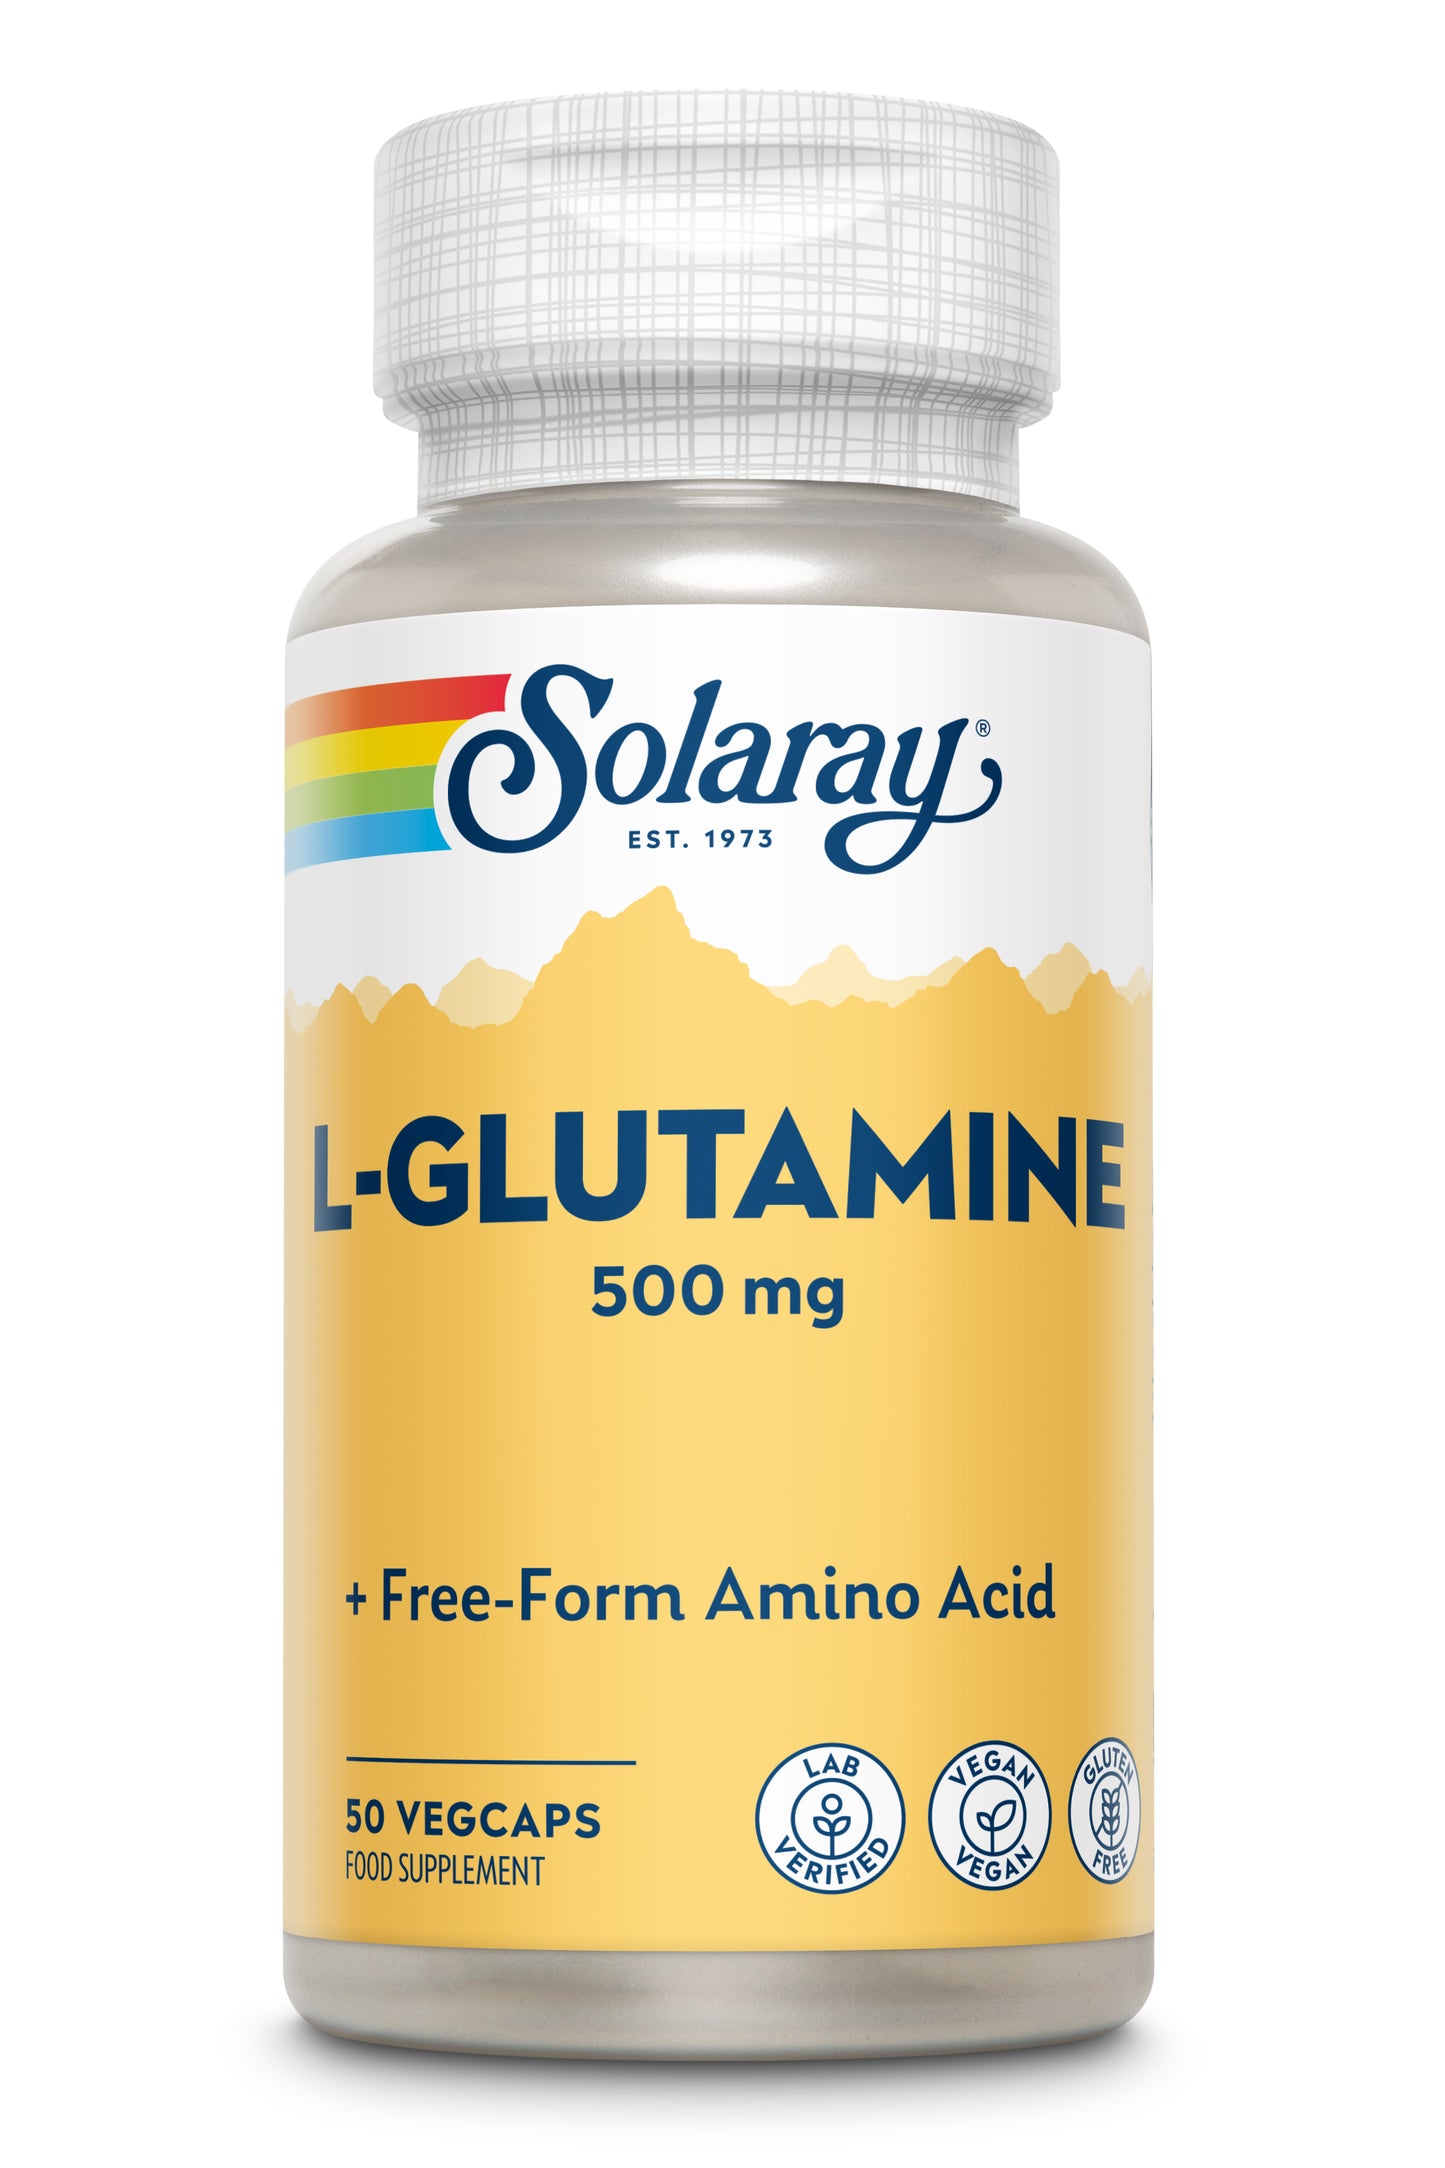 L-Glutamine, free form